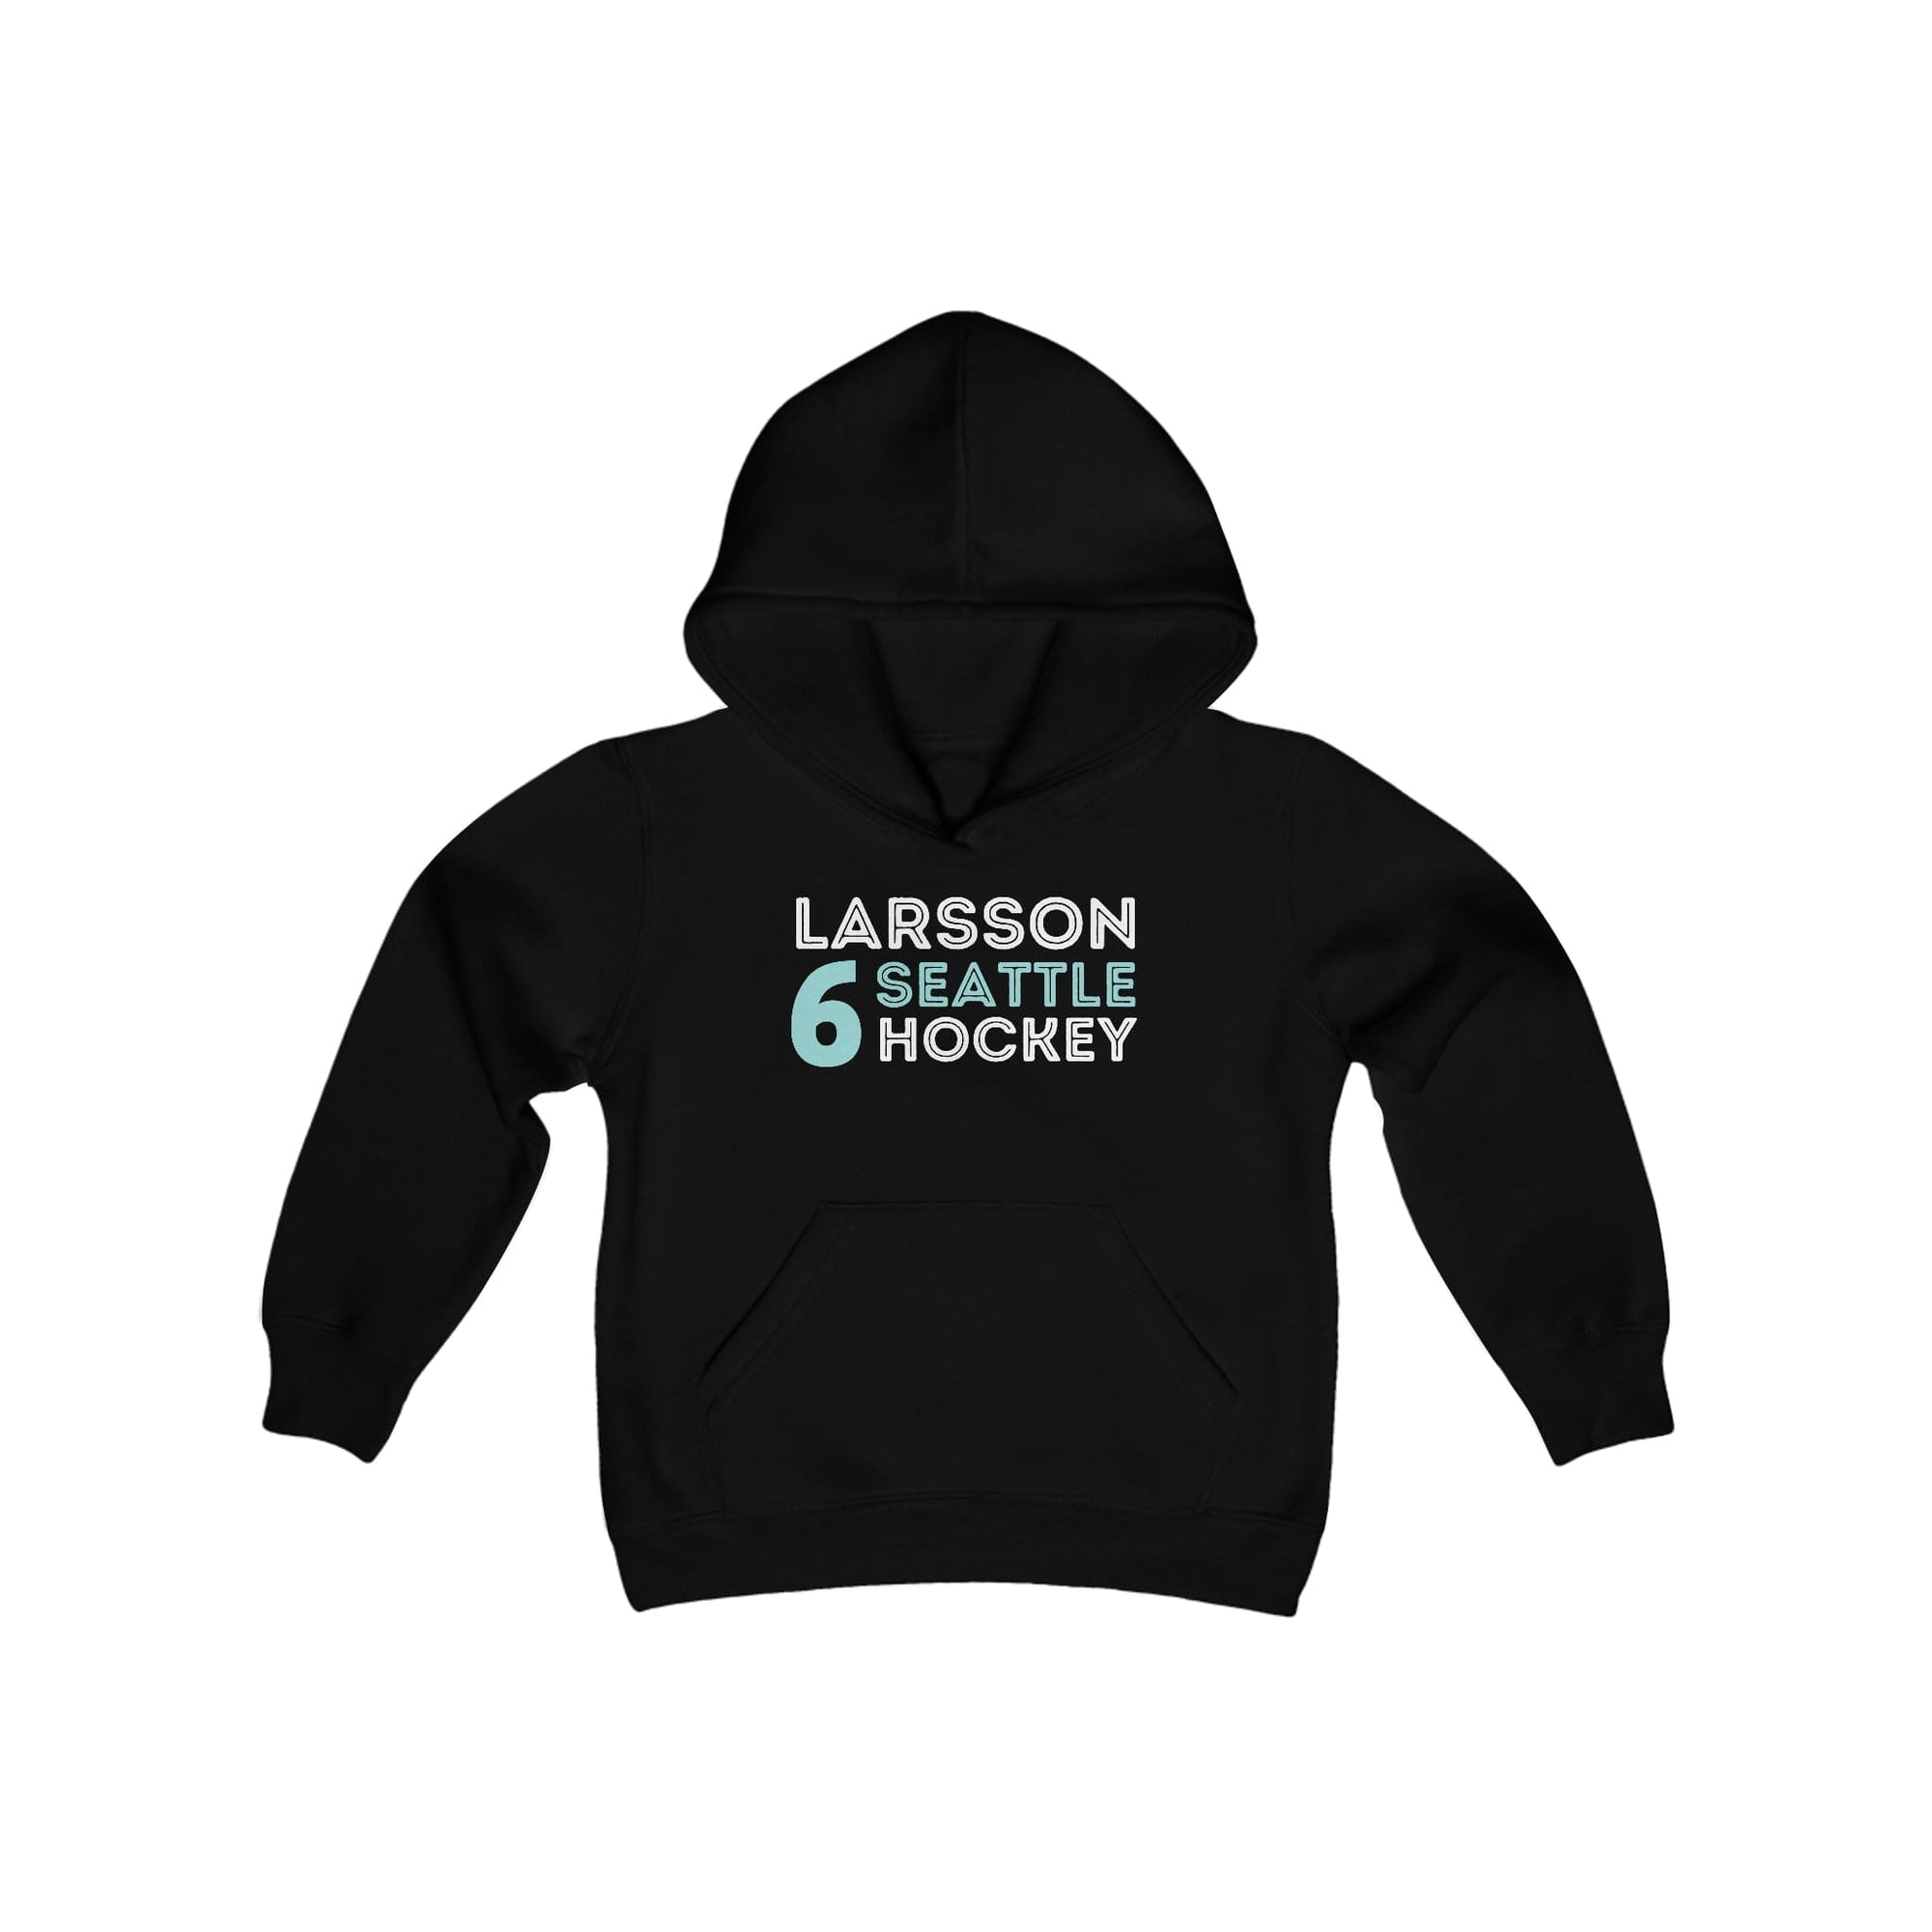 Kids clothes Larsson 6 Seattle Hockey Grafitti Wall Design Youth Hooded Sweatshirt